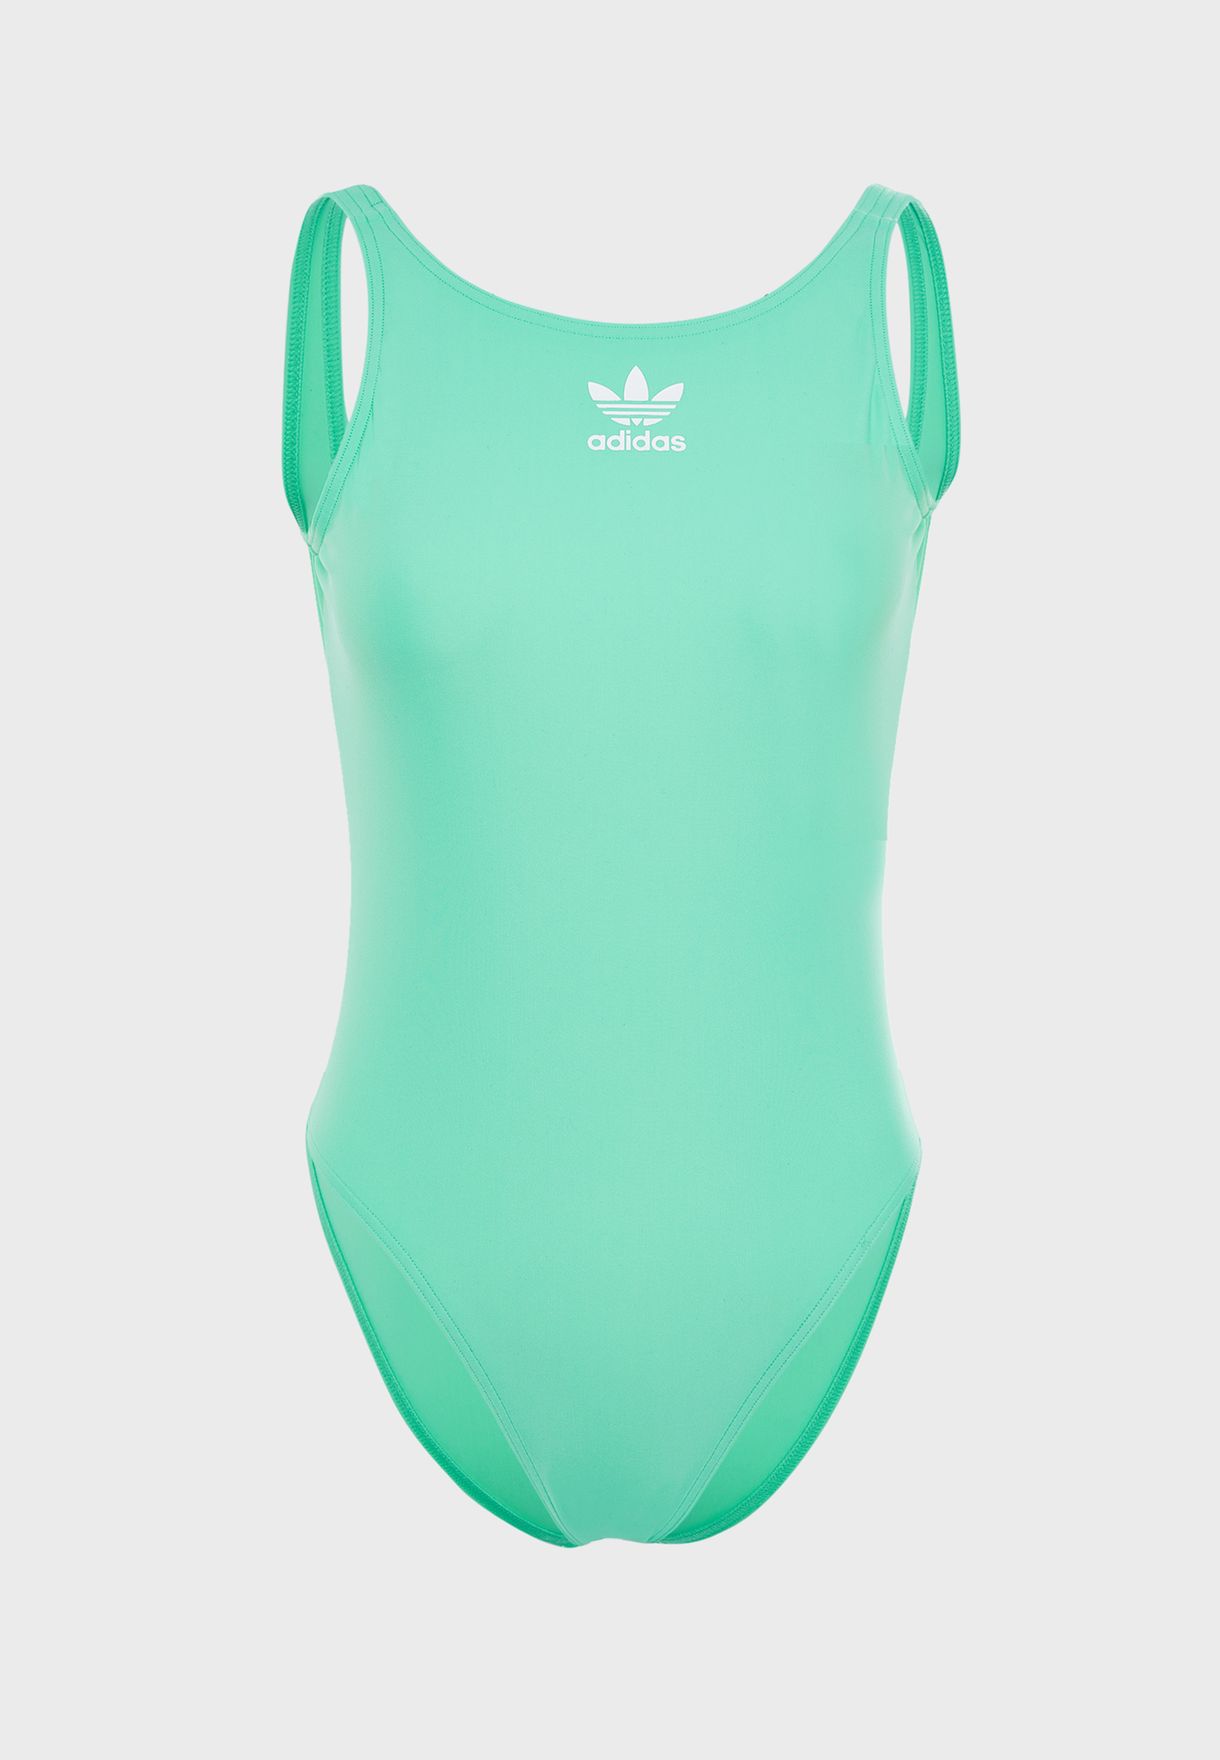 adidas green swimsuit